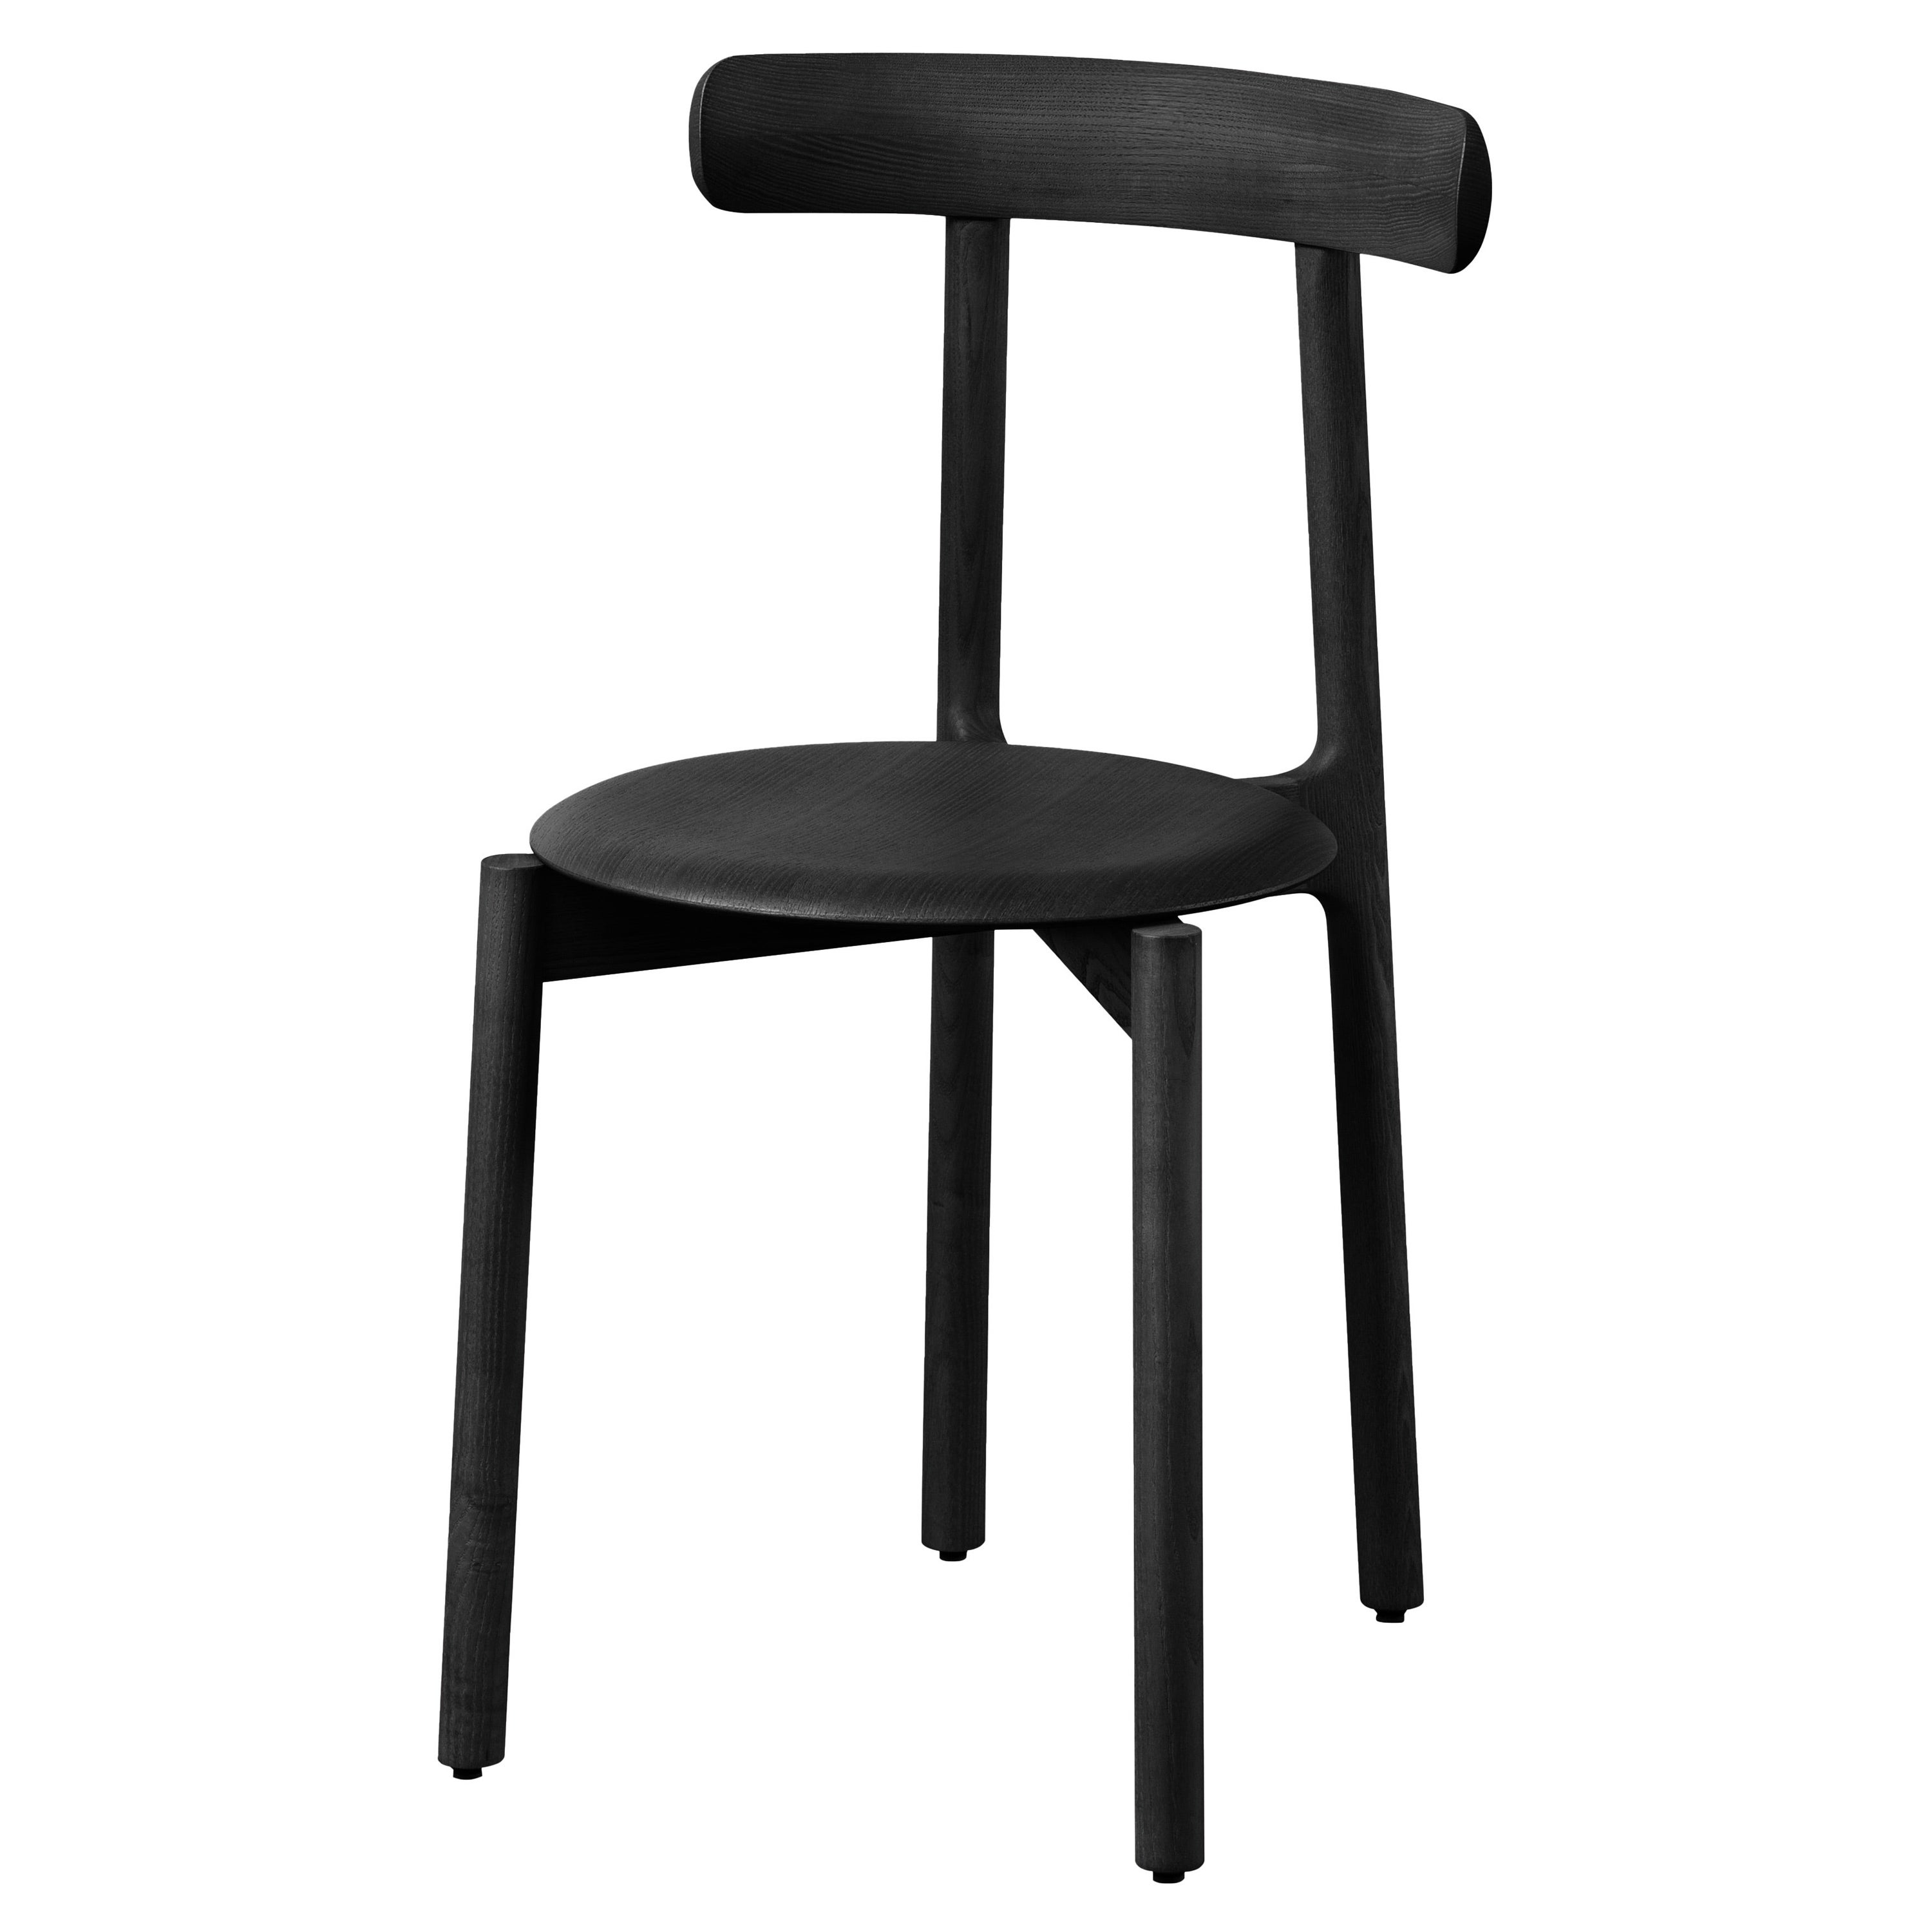 Miniforms Chairs